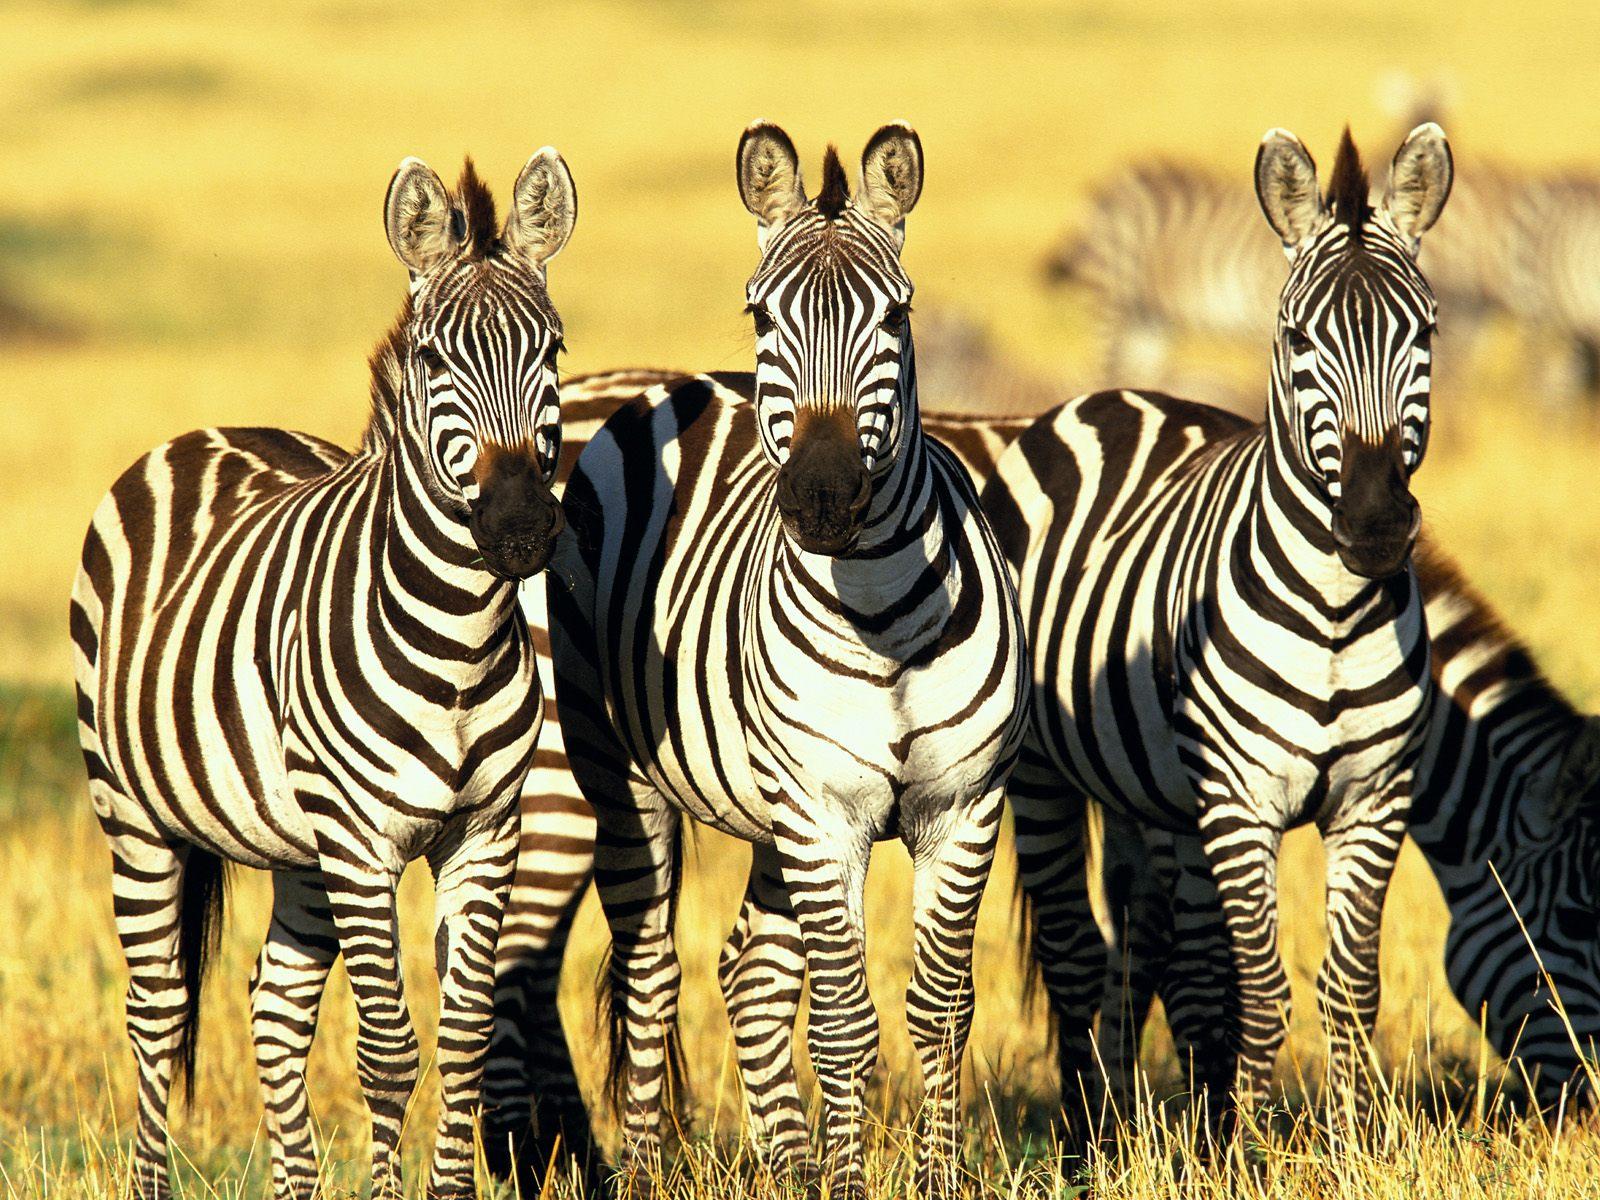 Burchell's Zebras Masai Mara Kenya # 1600x1200. All